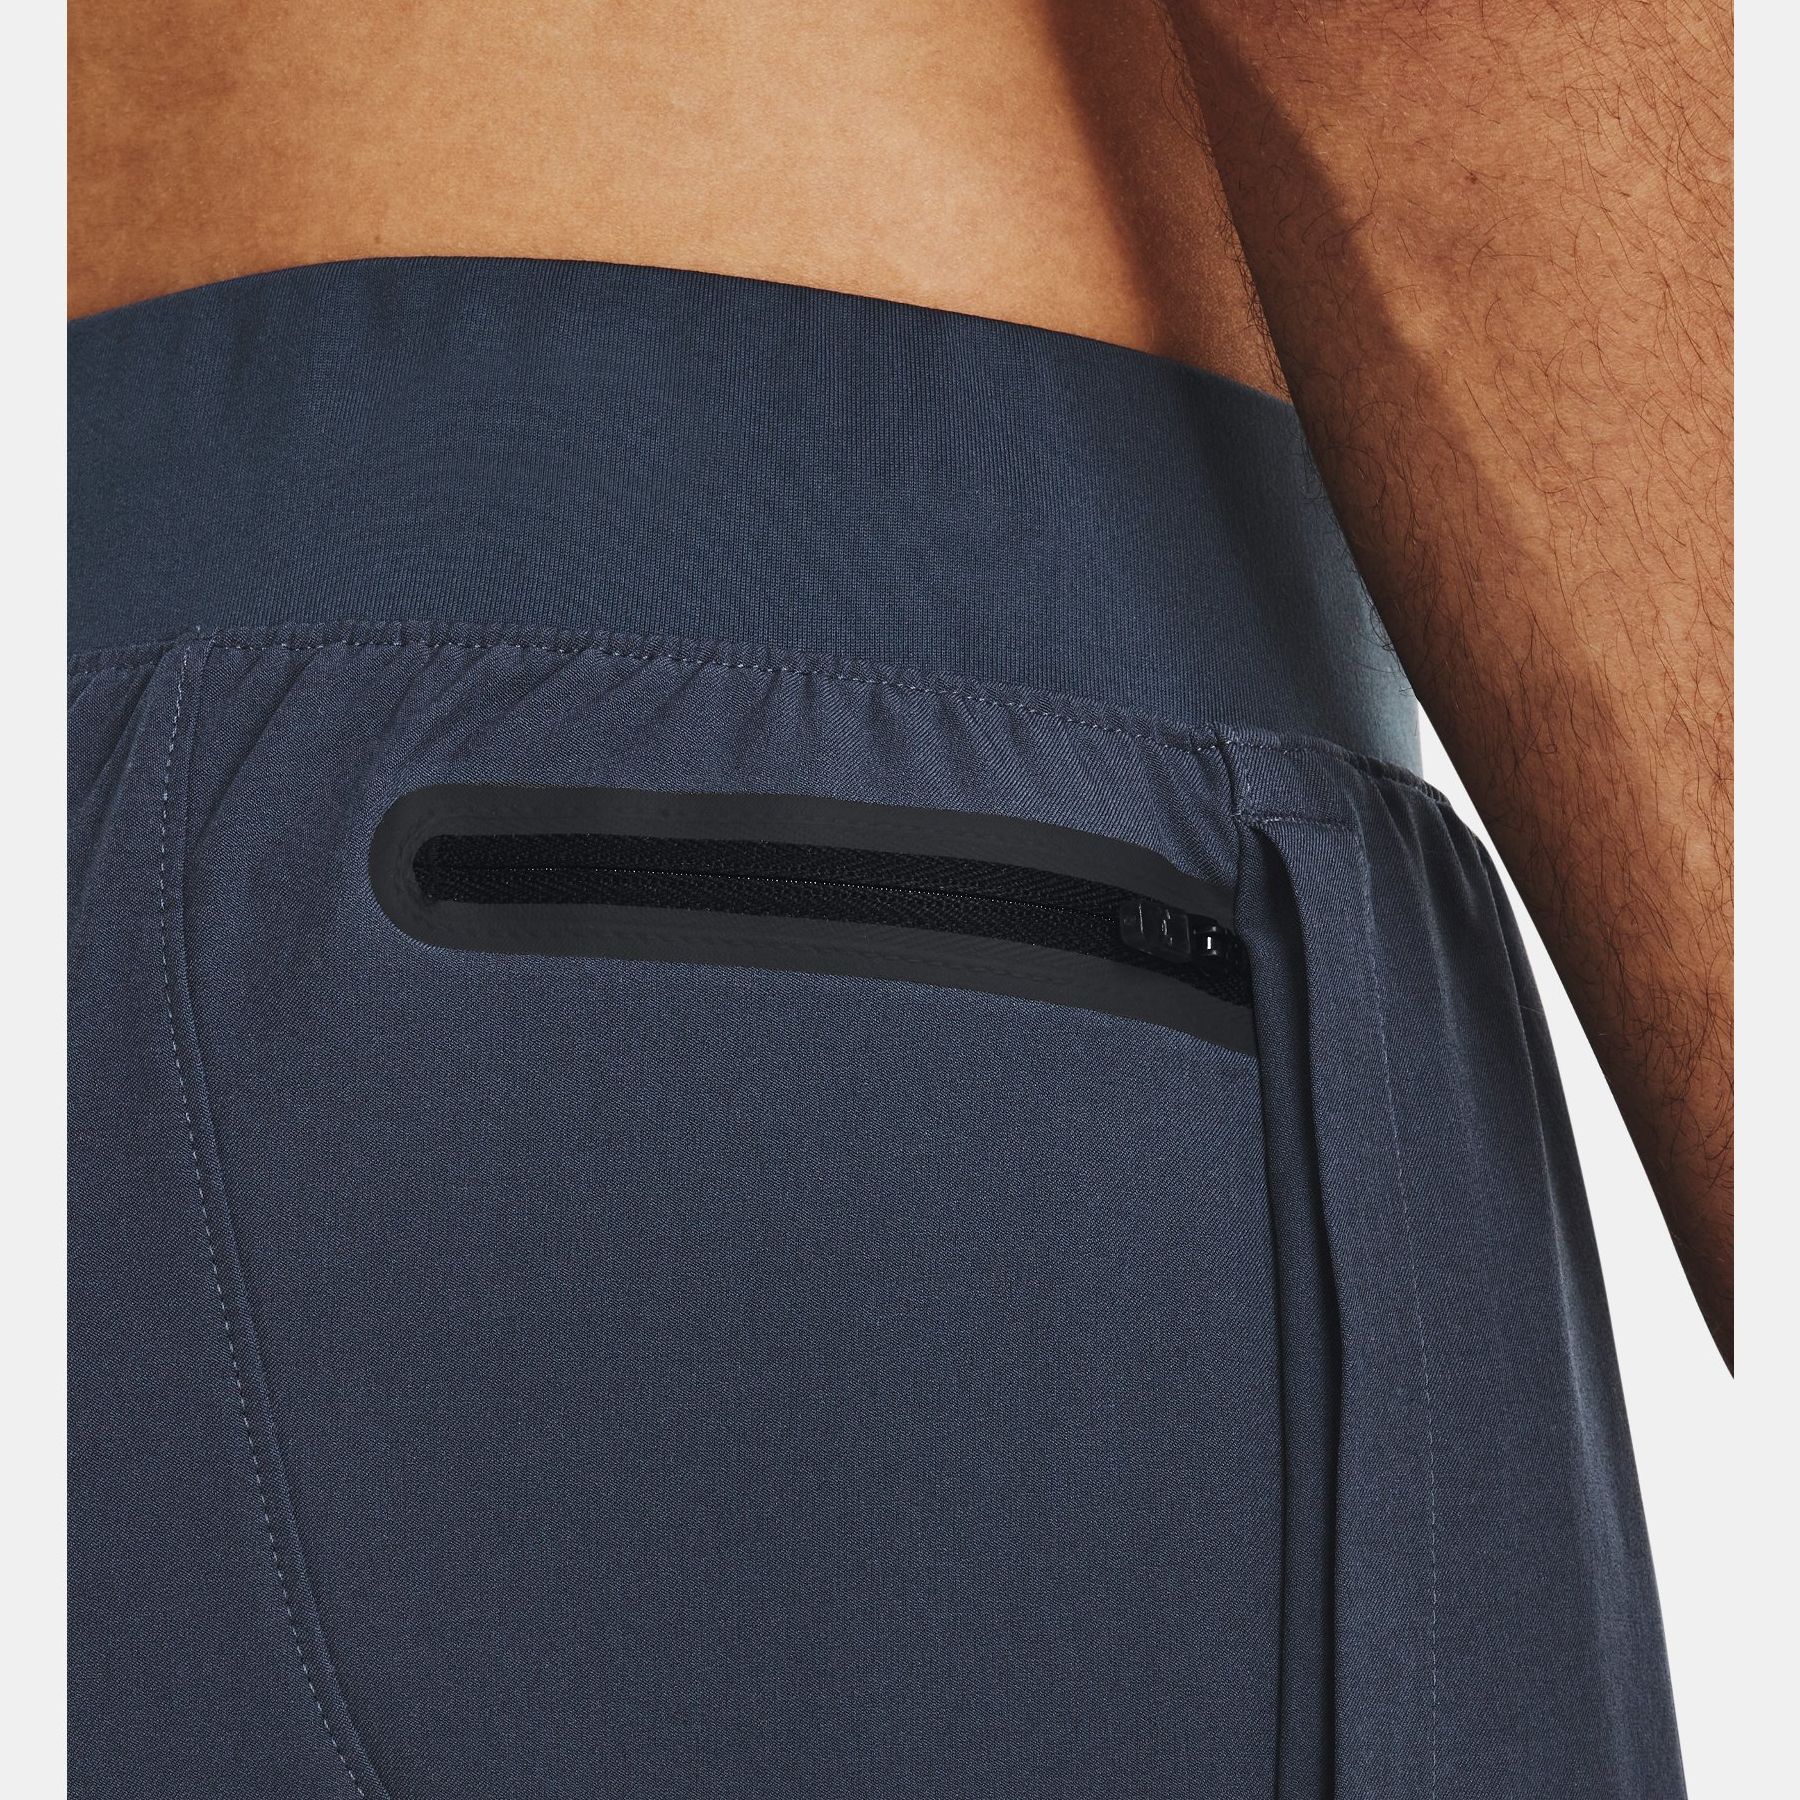 Pantaloni Lungi -  under armour UA Unstoppable Tapered Pants